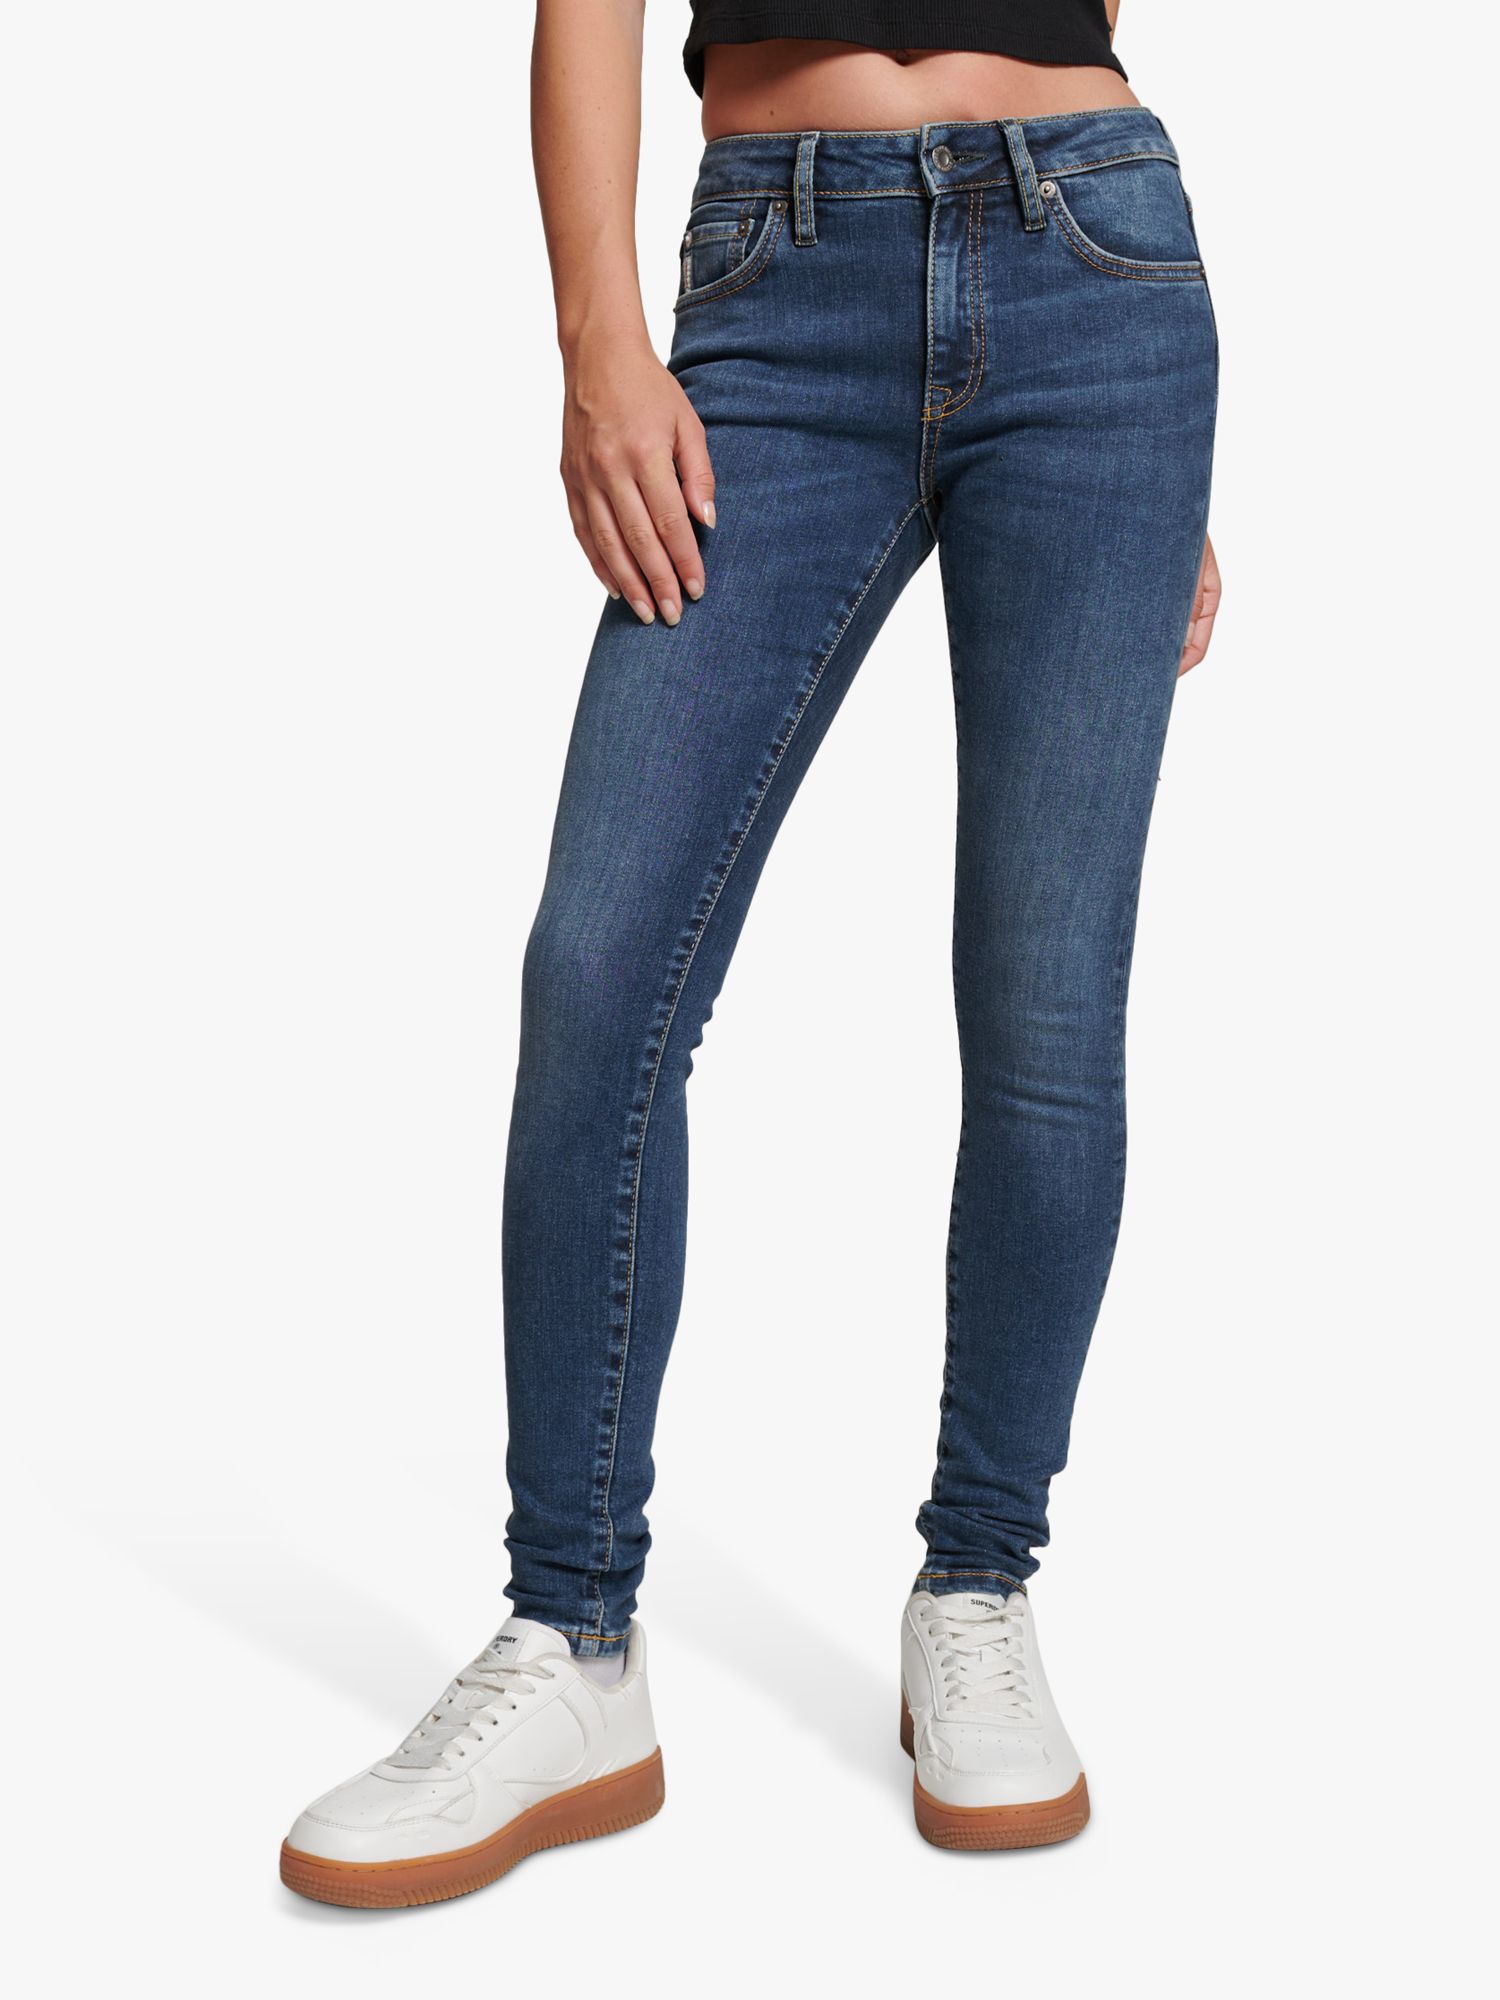 Superdry Organic Cotton High Rise Skinny Denim Jeans - Women's Womens Jeans